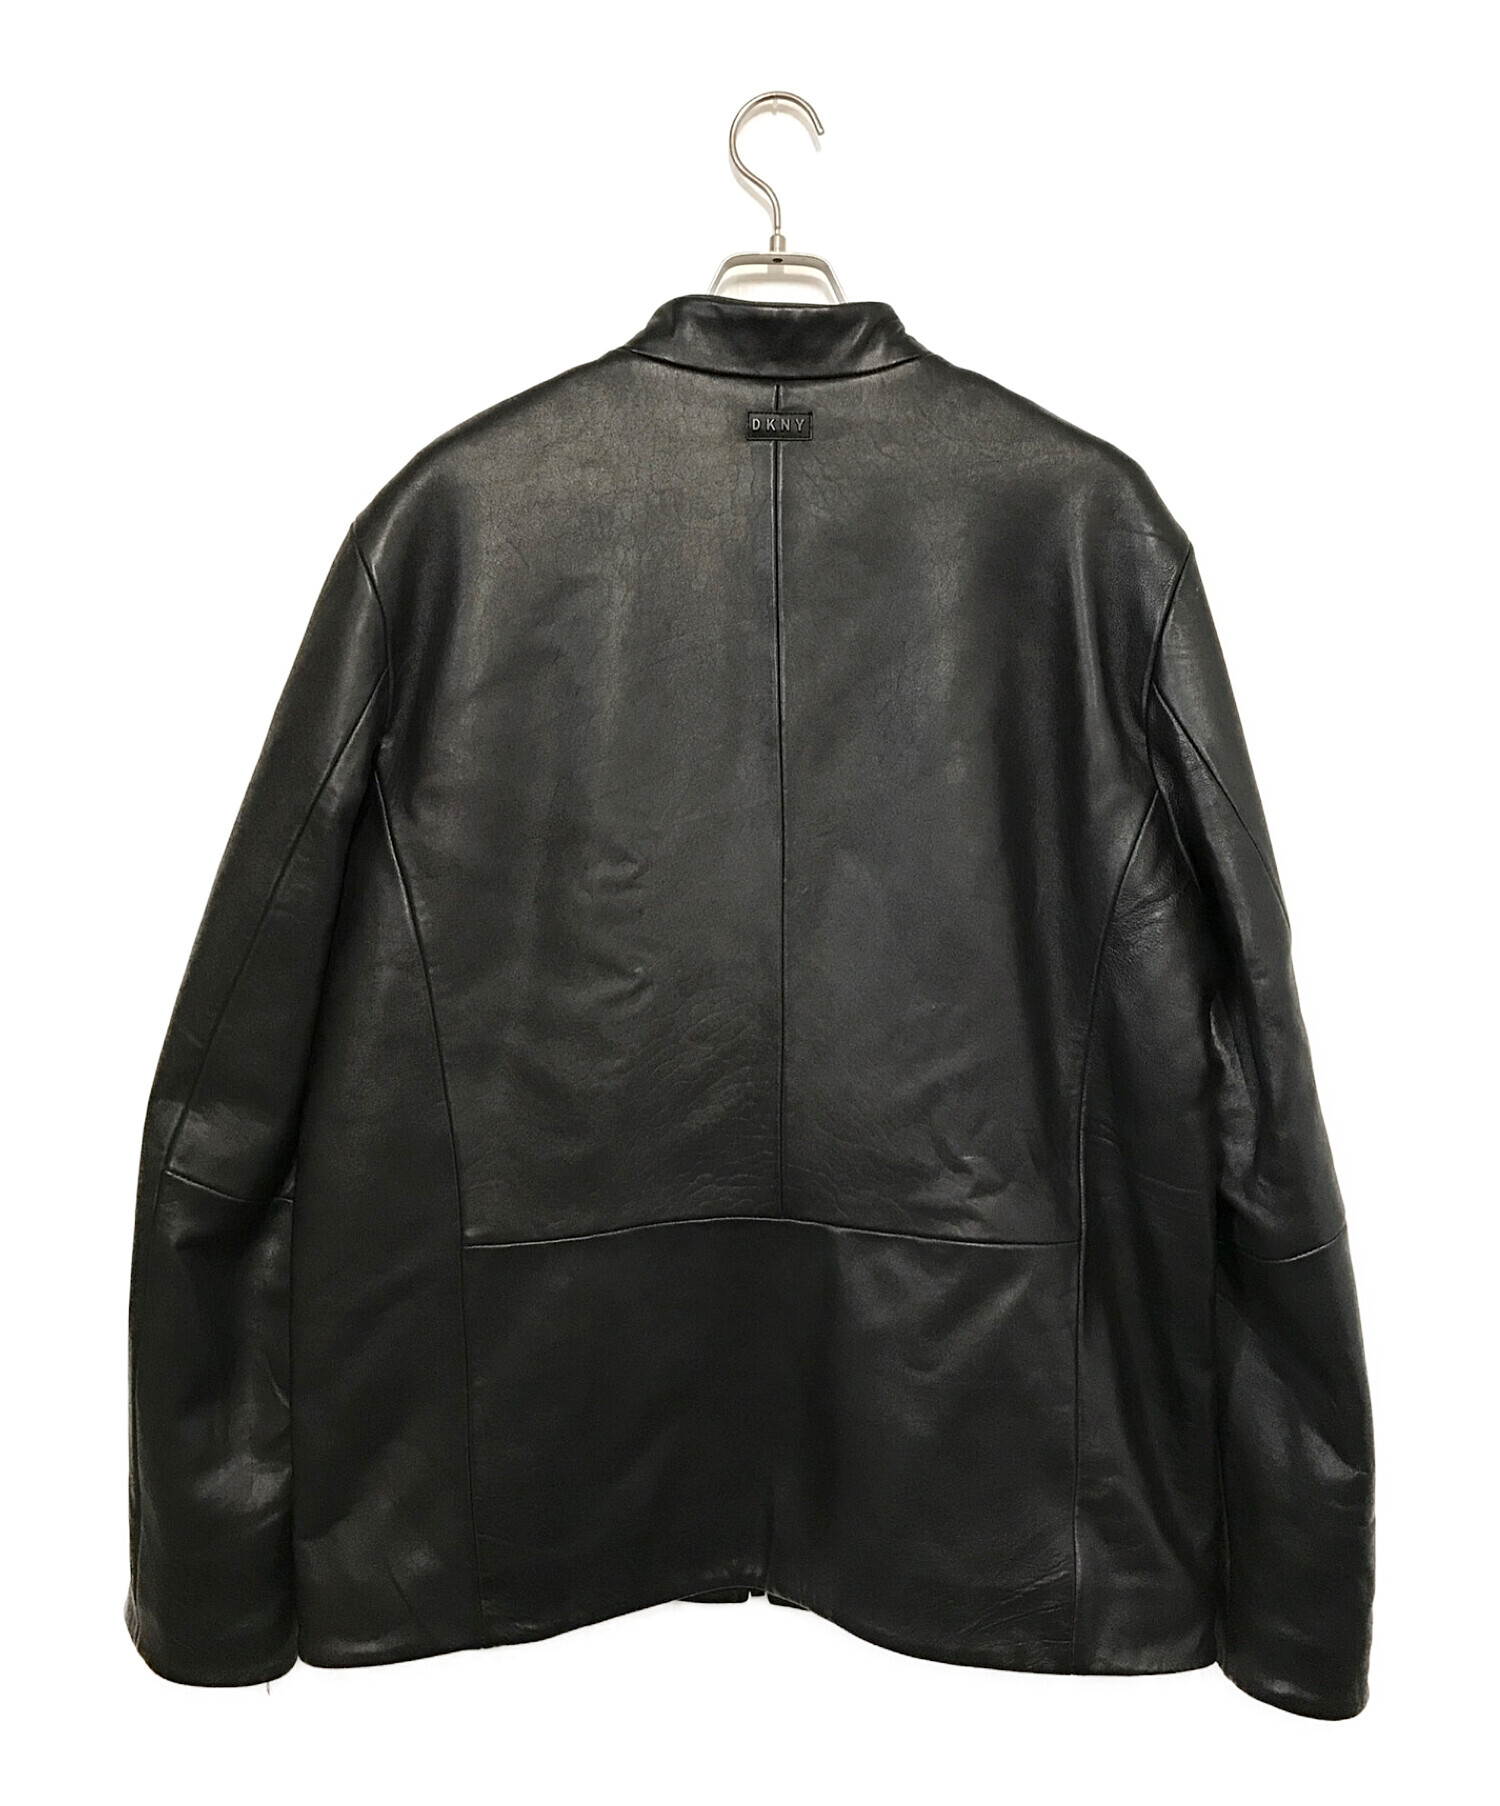 DKNY (ダナキャランニューヨーク) シングルライダースジャケット ブラック サイズ:Ⅼ